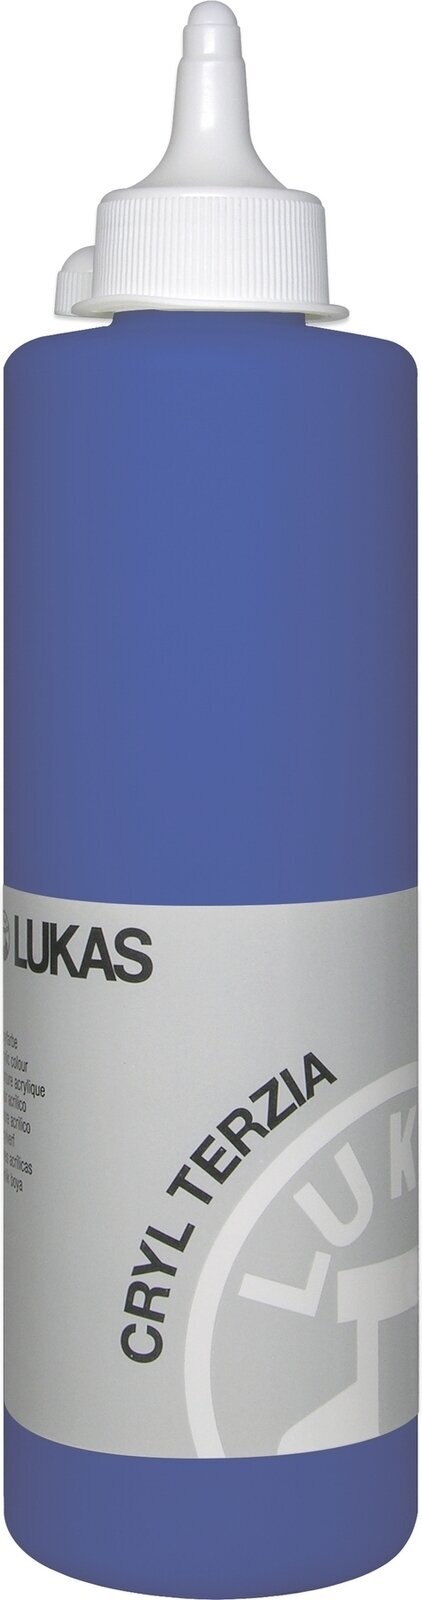 Peinture acrylique Lukas Cryl Terzia Peinture acrylique 500 ml Ultramarine